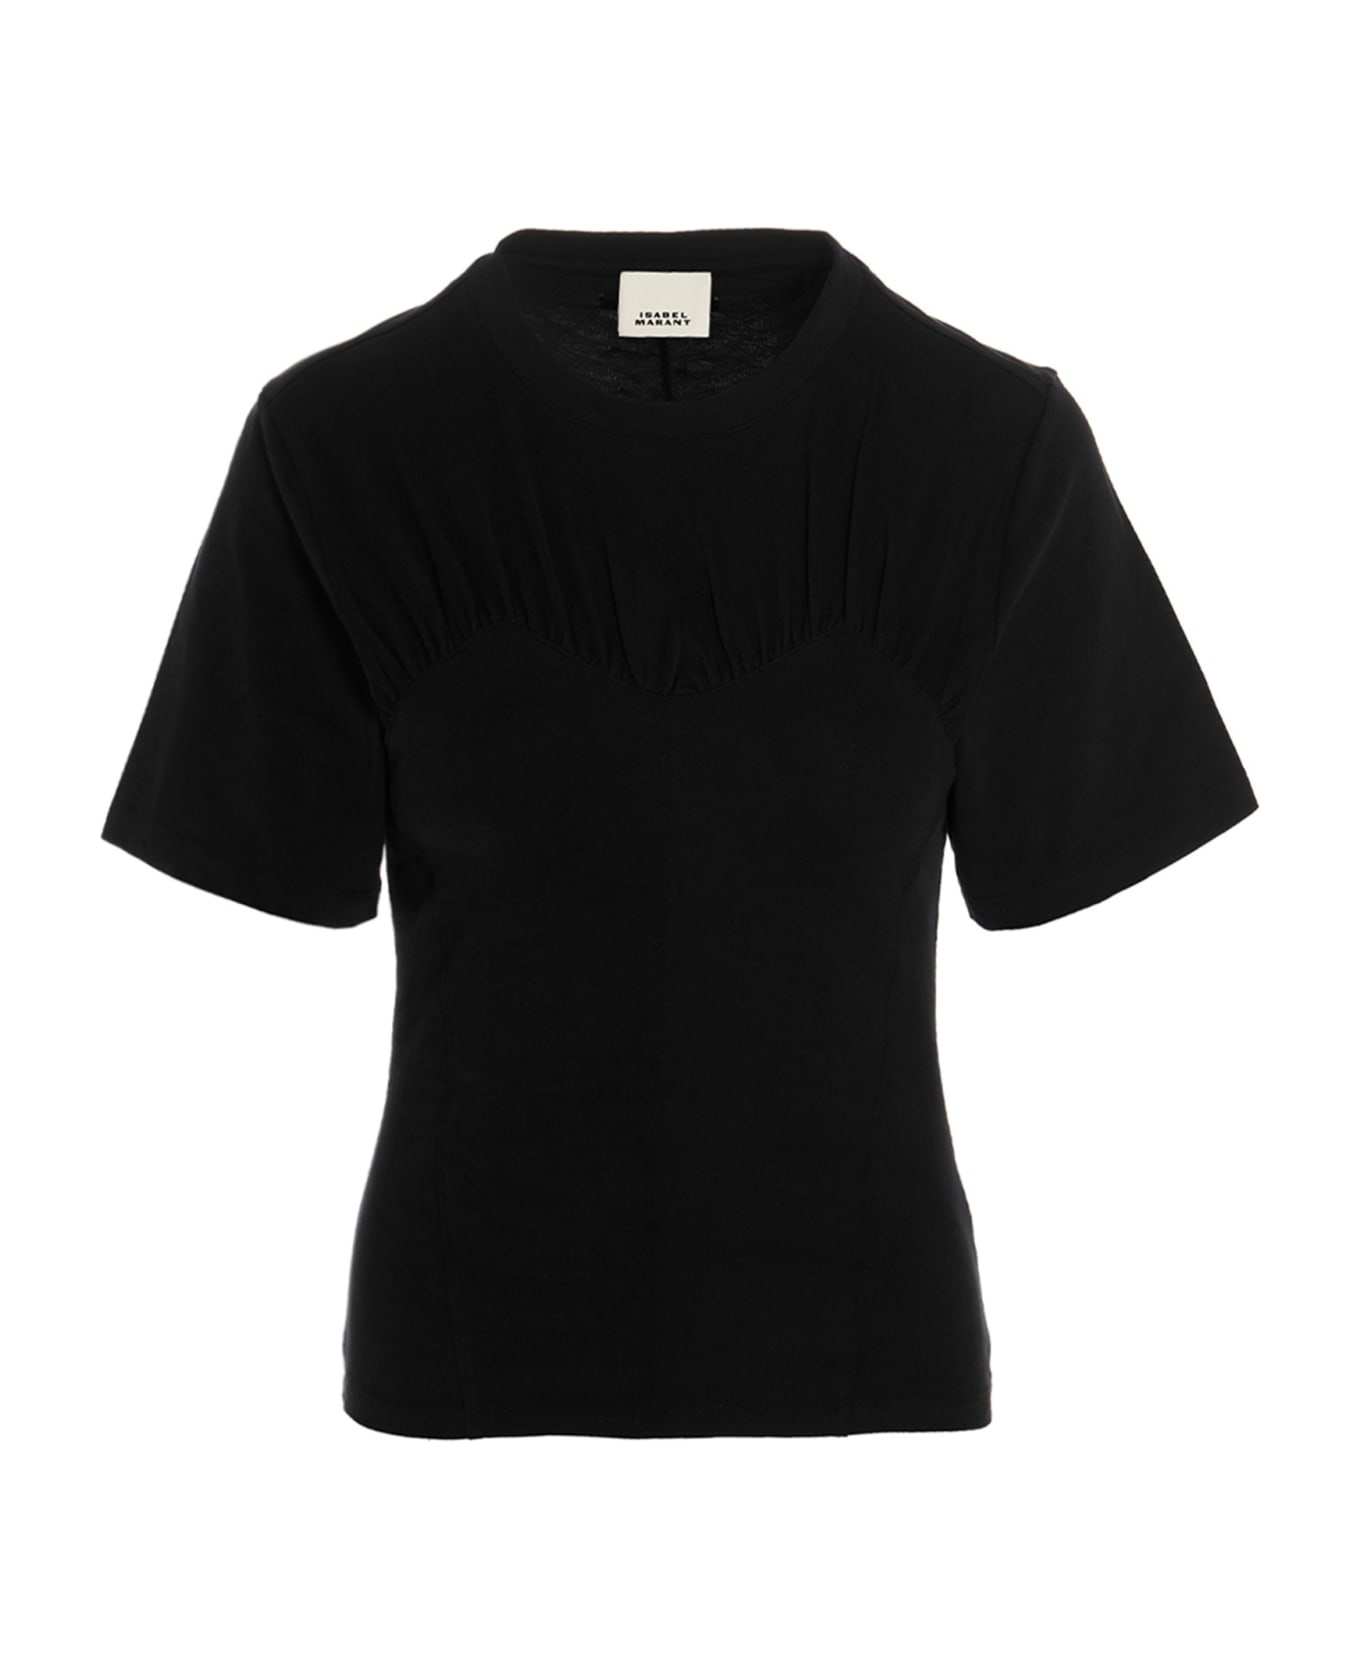 Isabel Marant Zazie T-shirt - Black